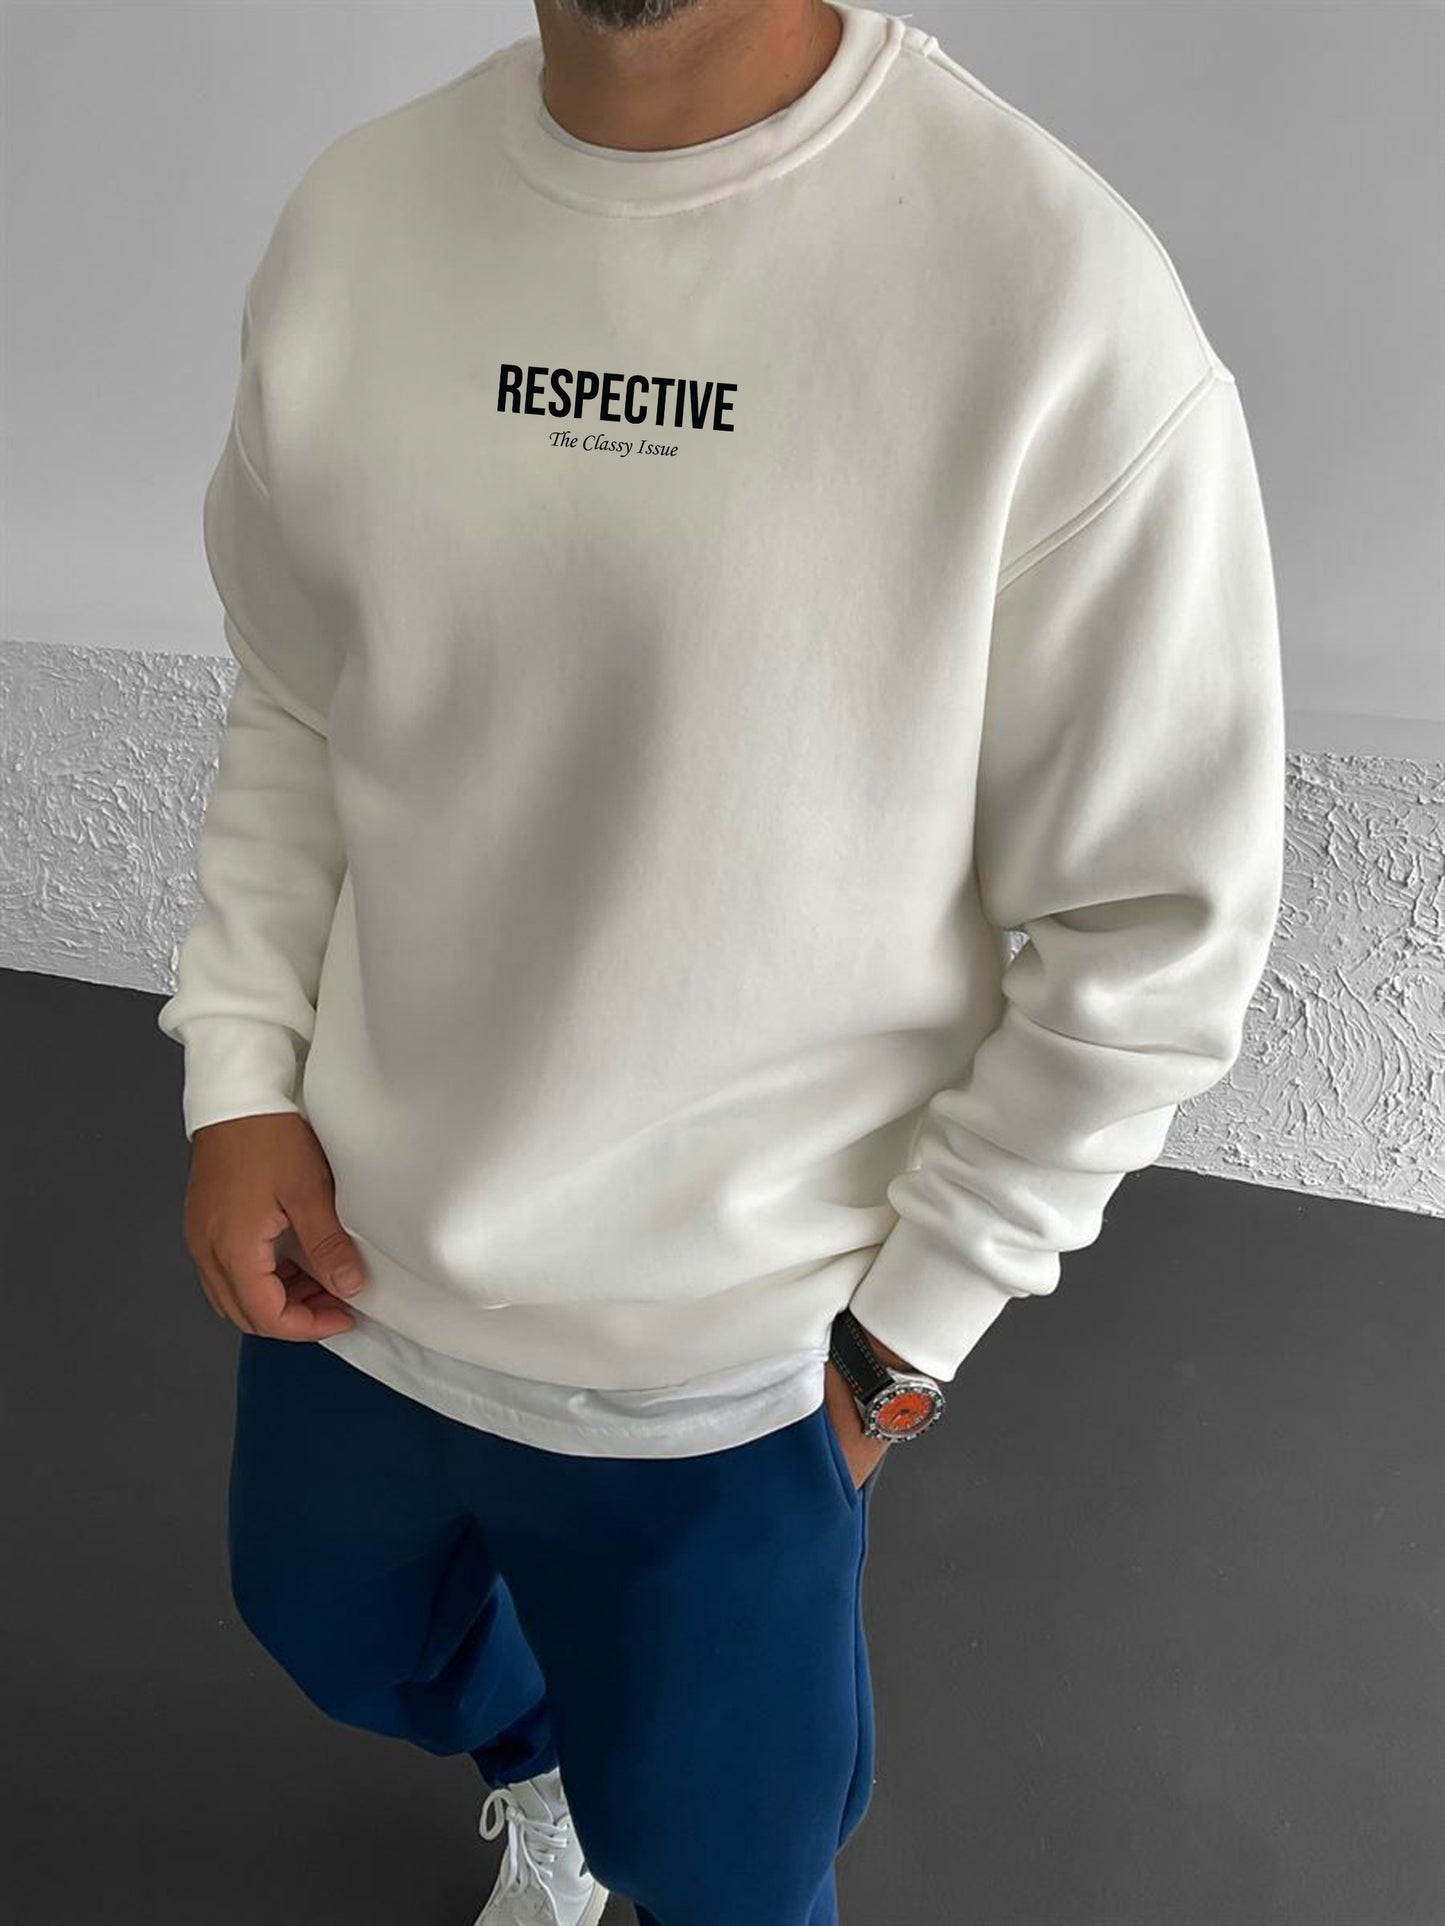 Off-White "Respective " Printed Oversize Sweatshirt